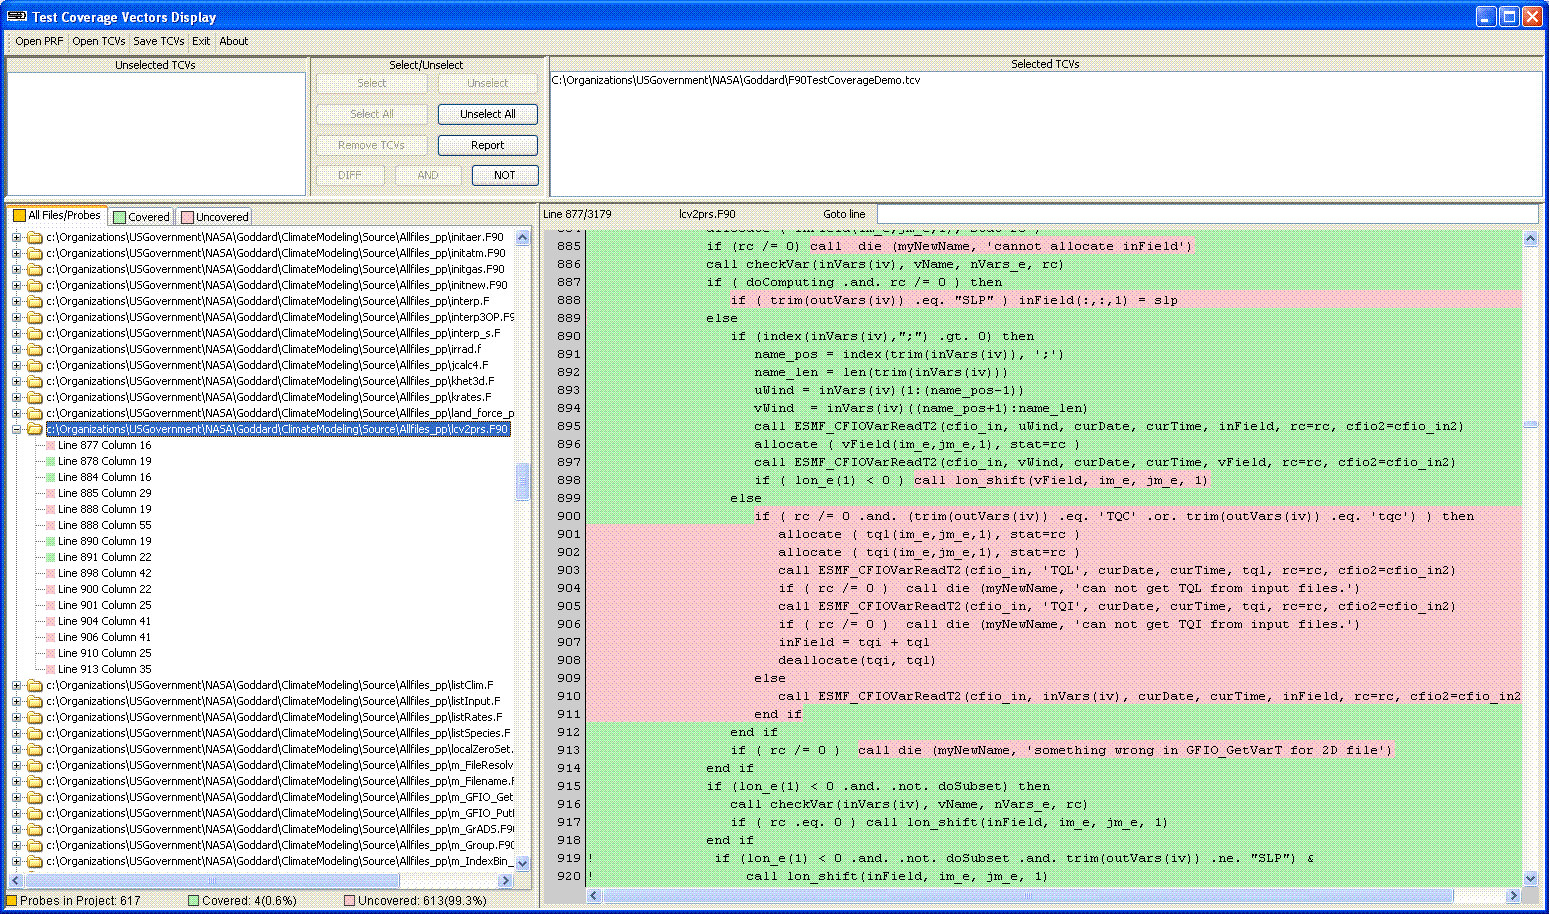 F90 Test Coverage Display screen shot